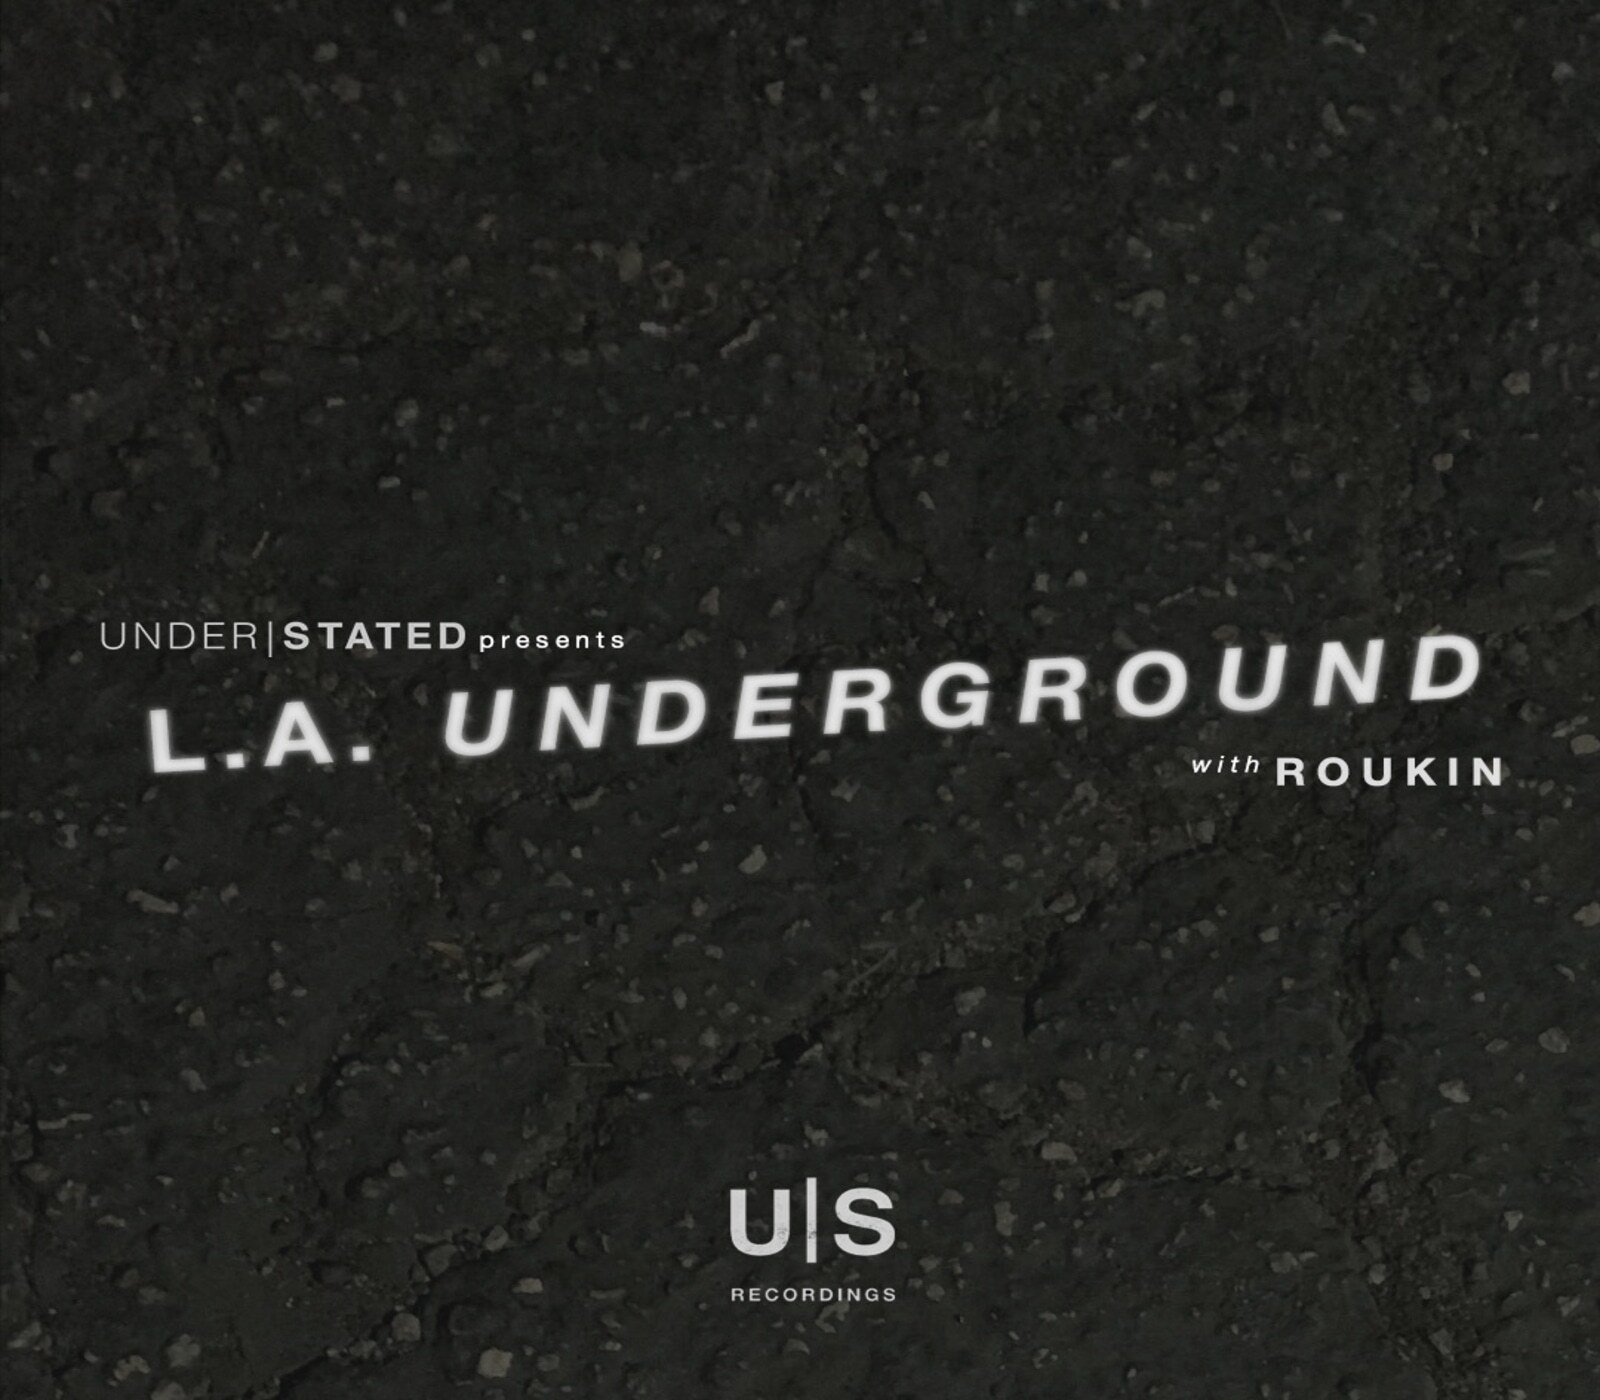 Understated presents L.A. Underground with Roukin